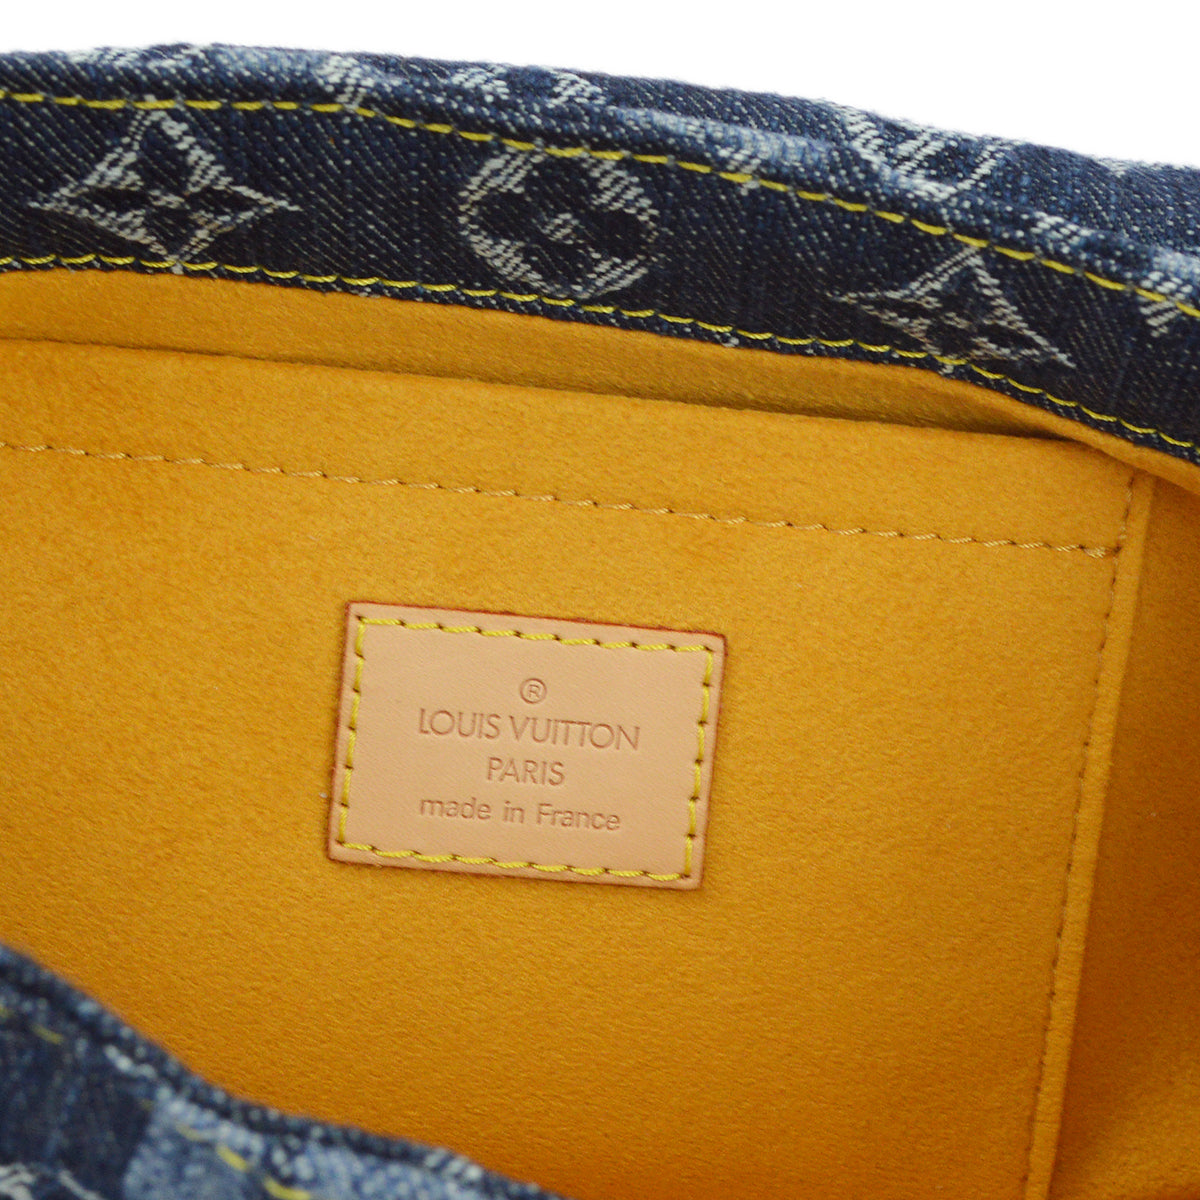 Louis Vuitton 2006 Blue Monogram Denim Mini Pleaty Raye Handbag M95333